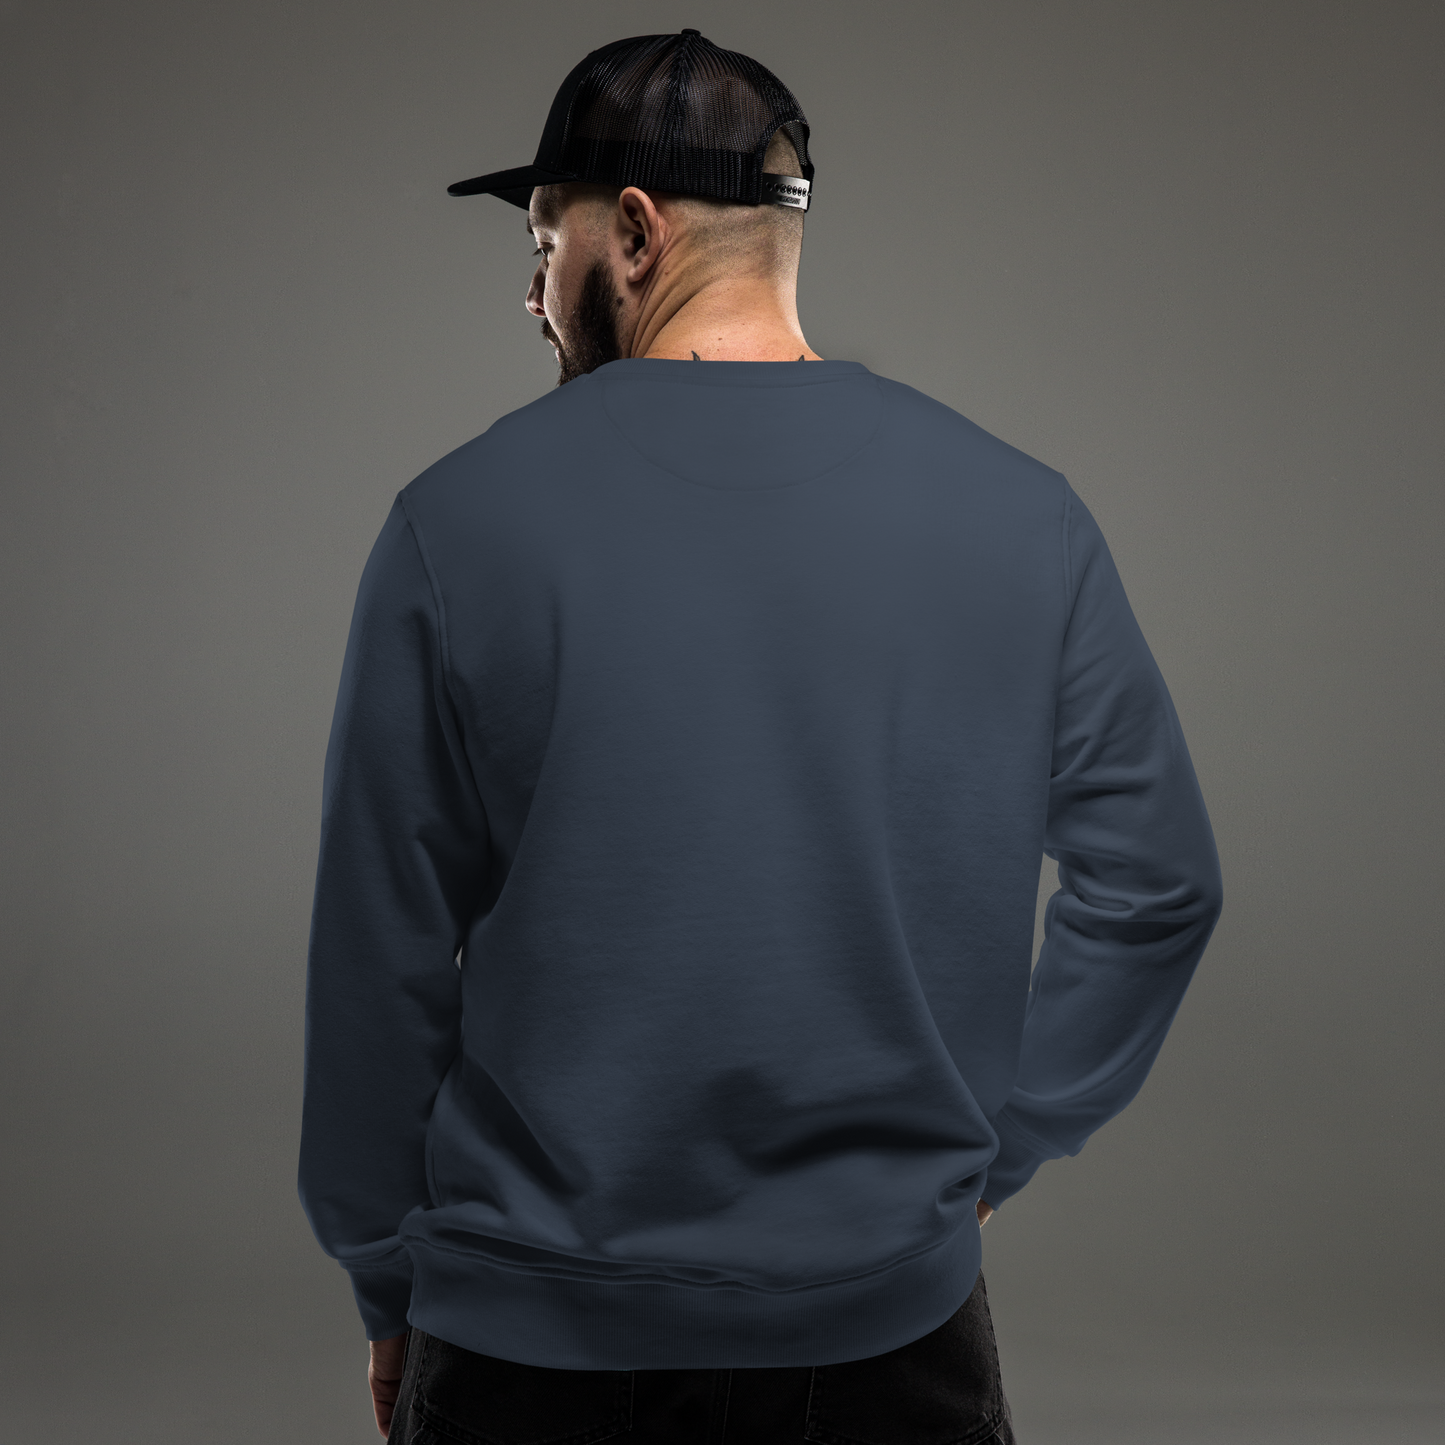 Sweatshirt - Discreet V1.0 - Black/ Navy - Standard